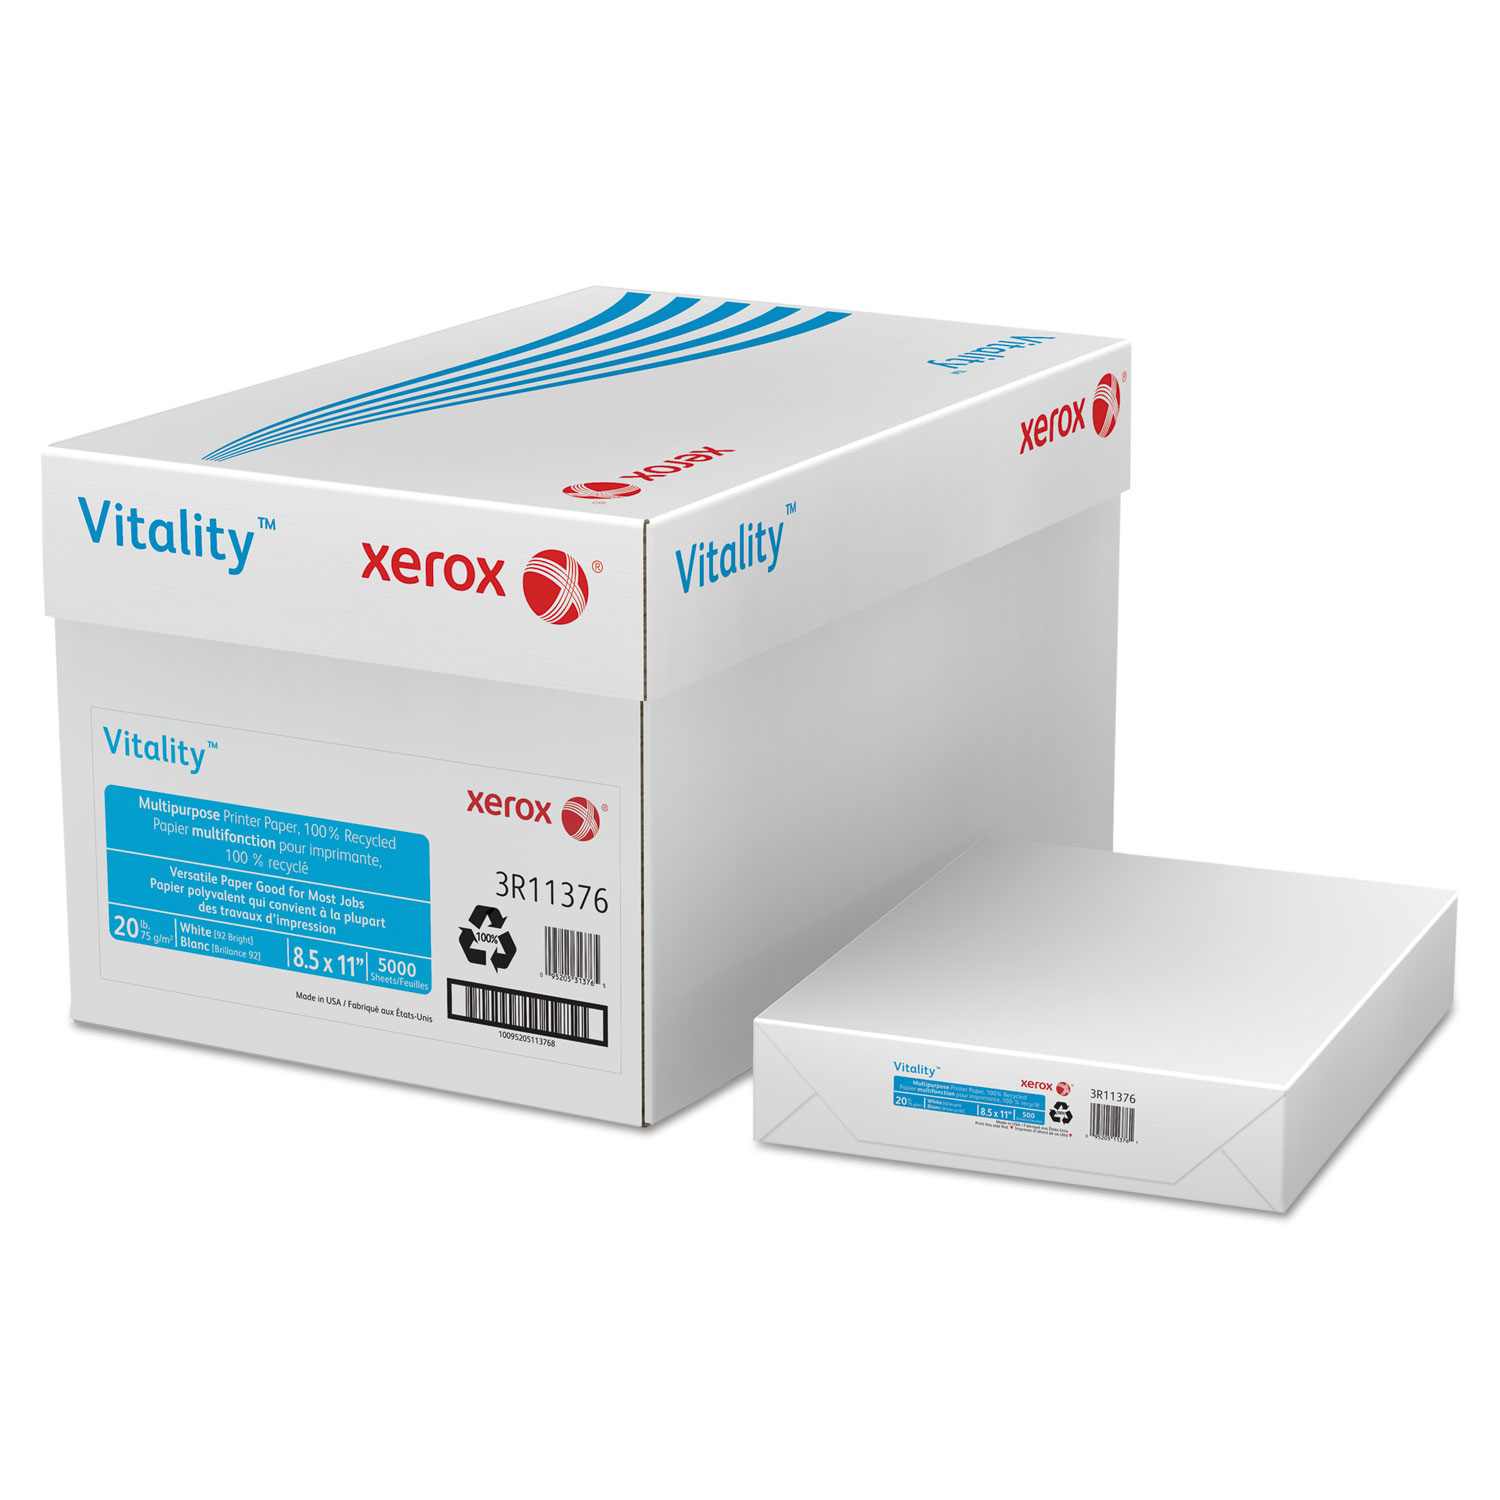  xerox 3R11376 Vitality 100% Recycled Multipurpose Paper, 92 Bright, 20lb, 8.5 x 11, White, 500 Sheets/Ream, 10 Reams/Carton (XER3R11376) 